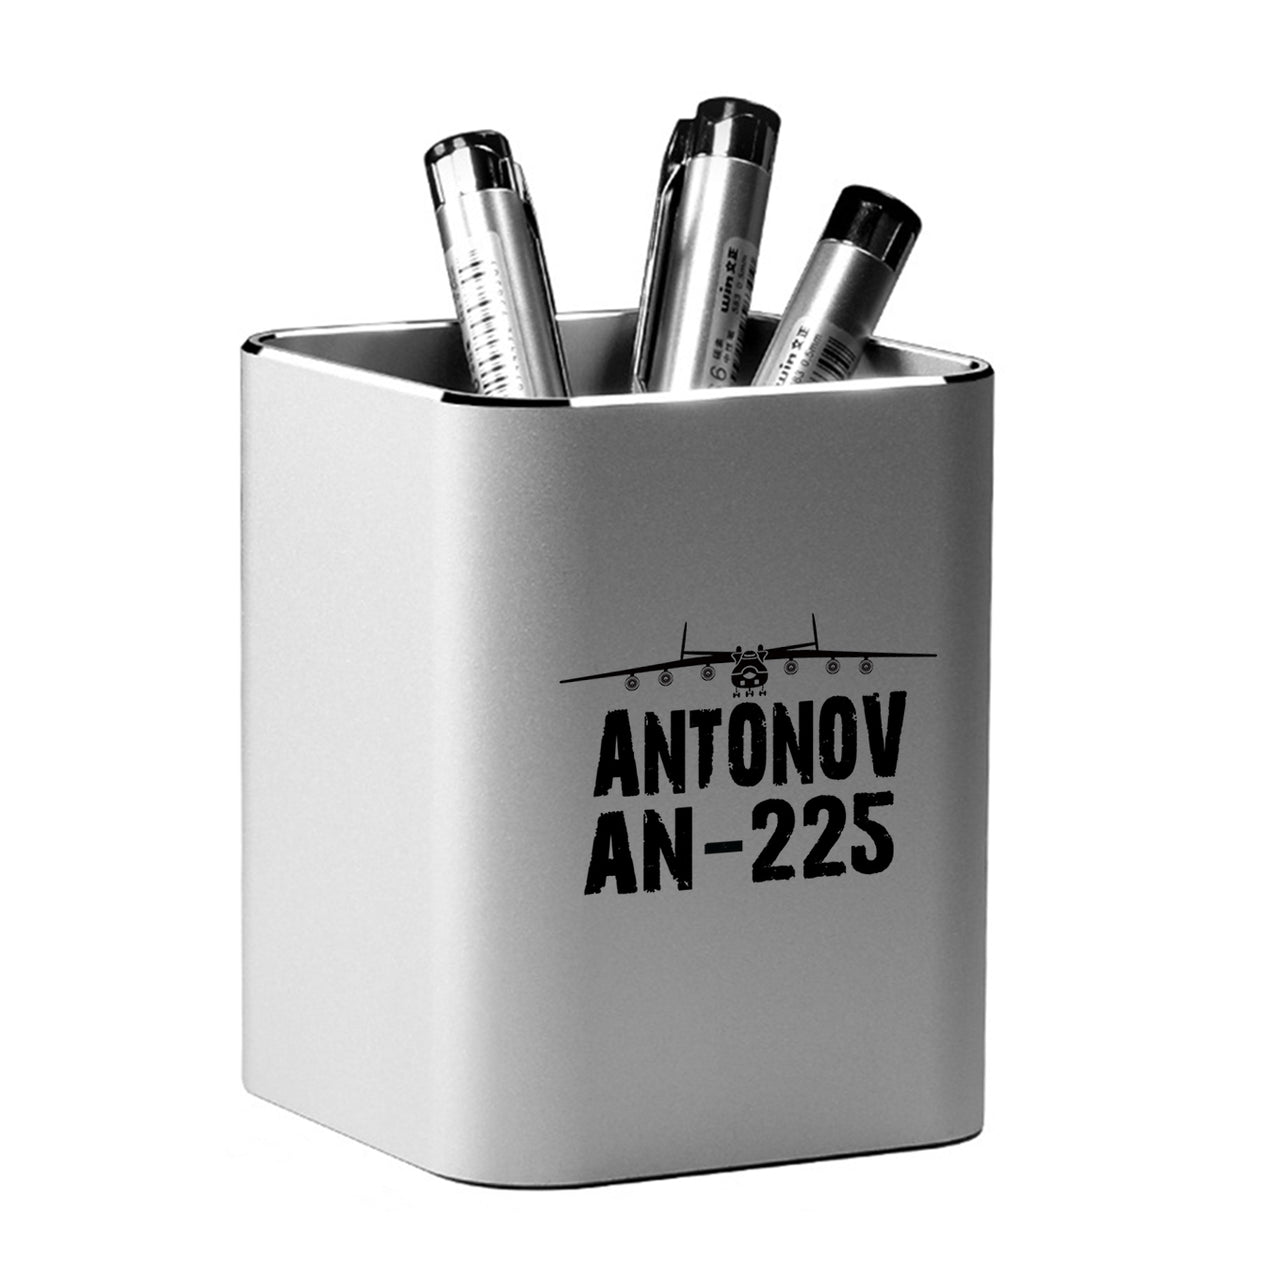 Antonov AN-225 & Plane Designed Aluminium Alloy Pen Holders